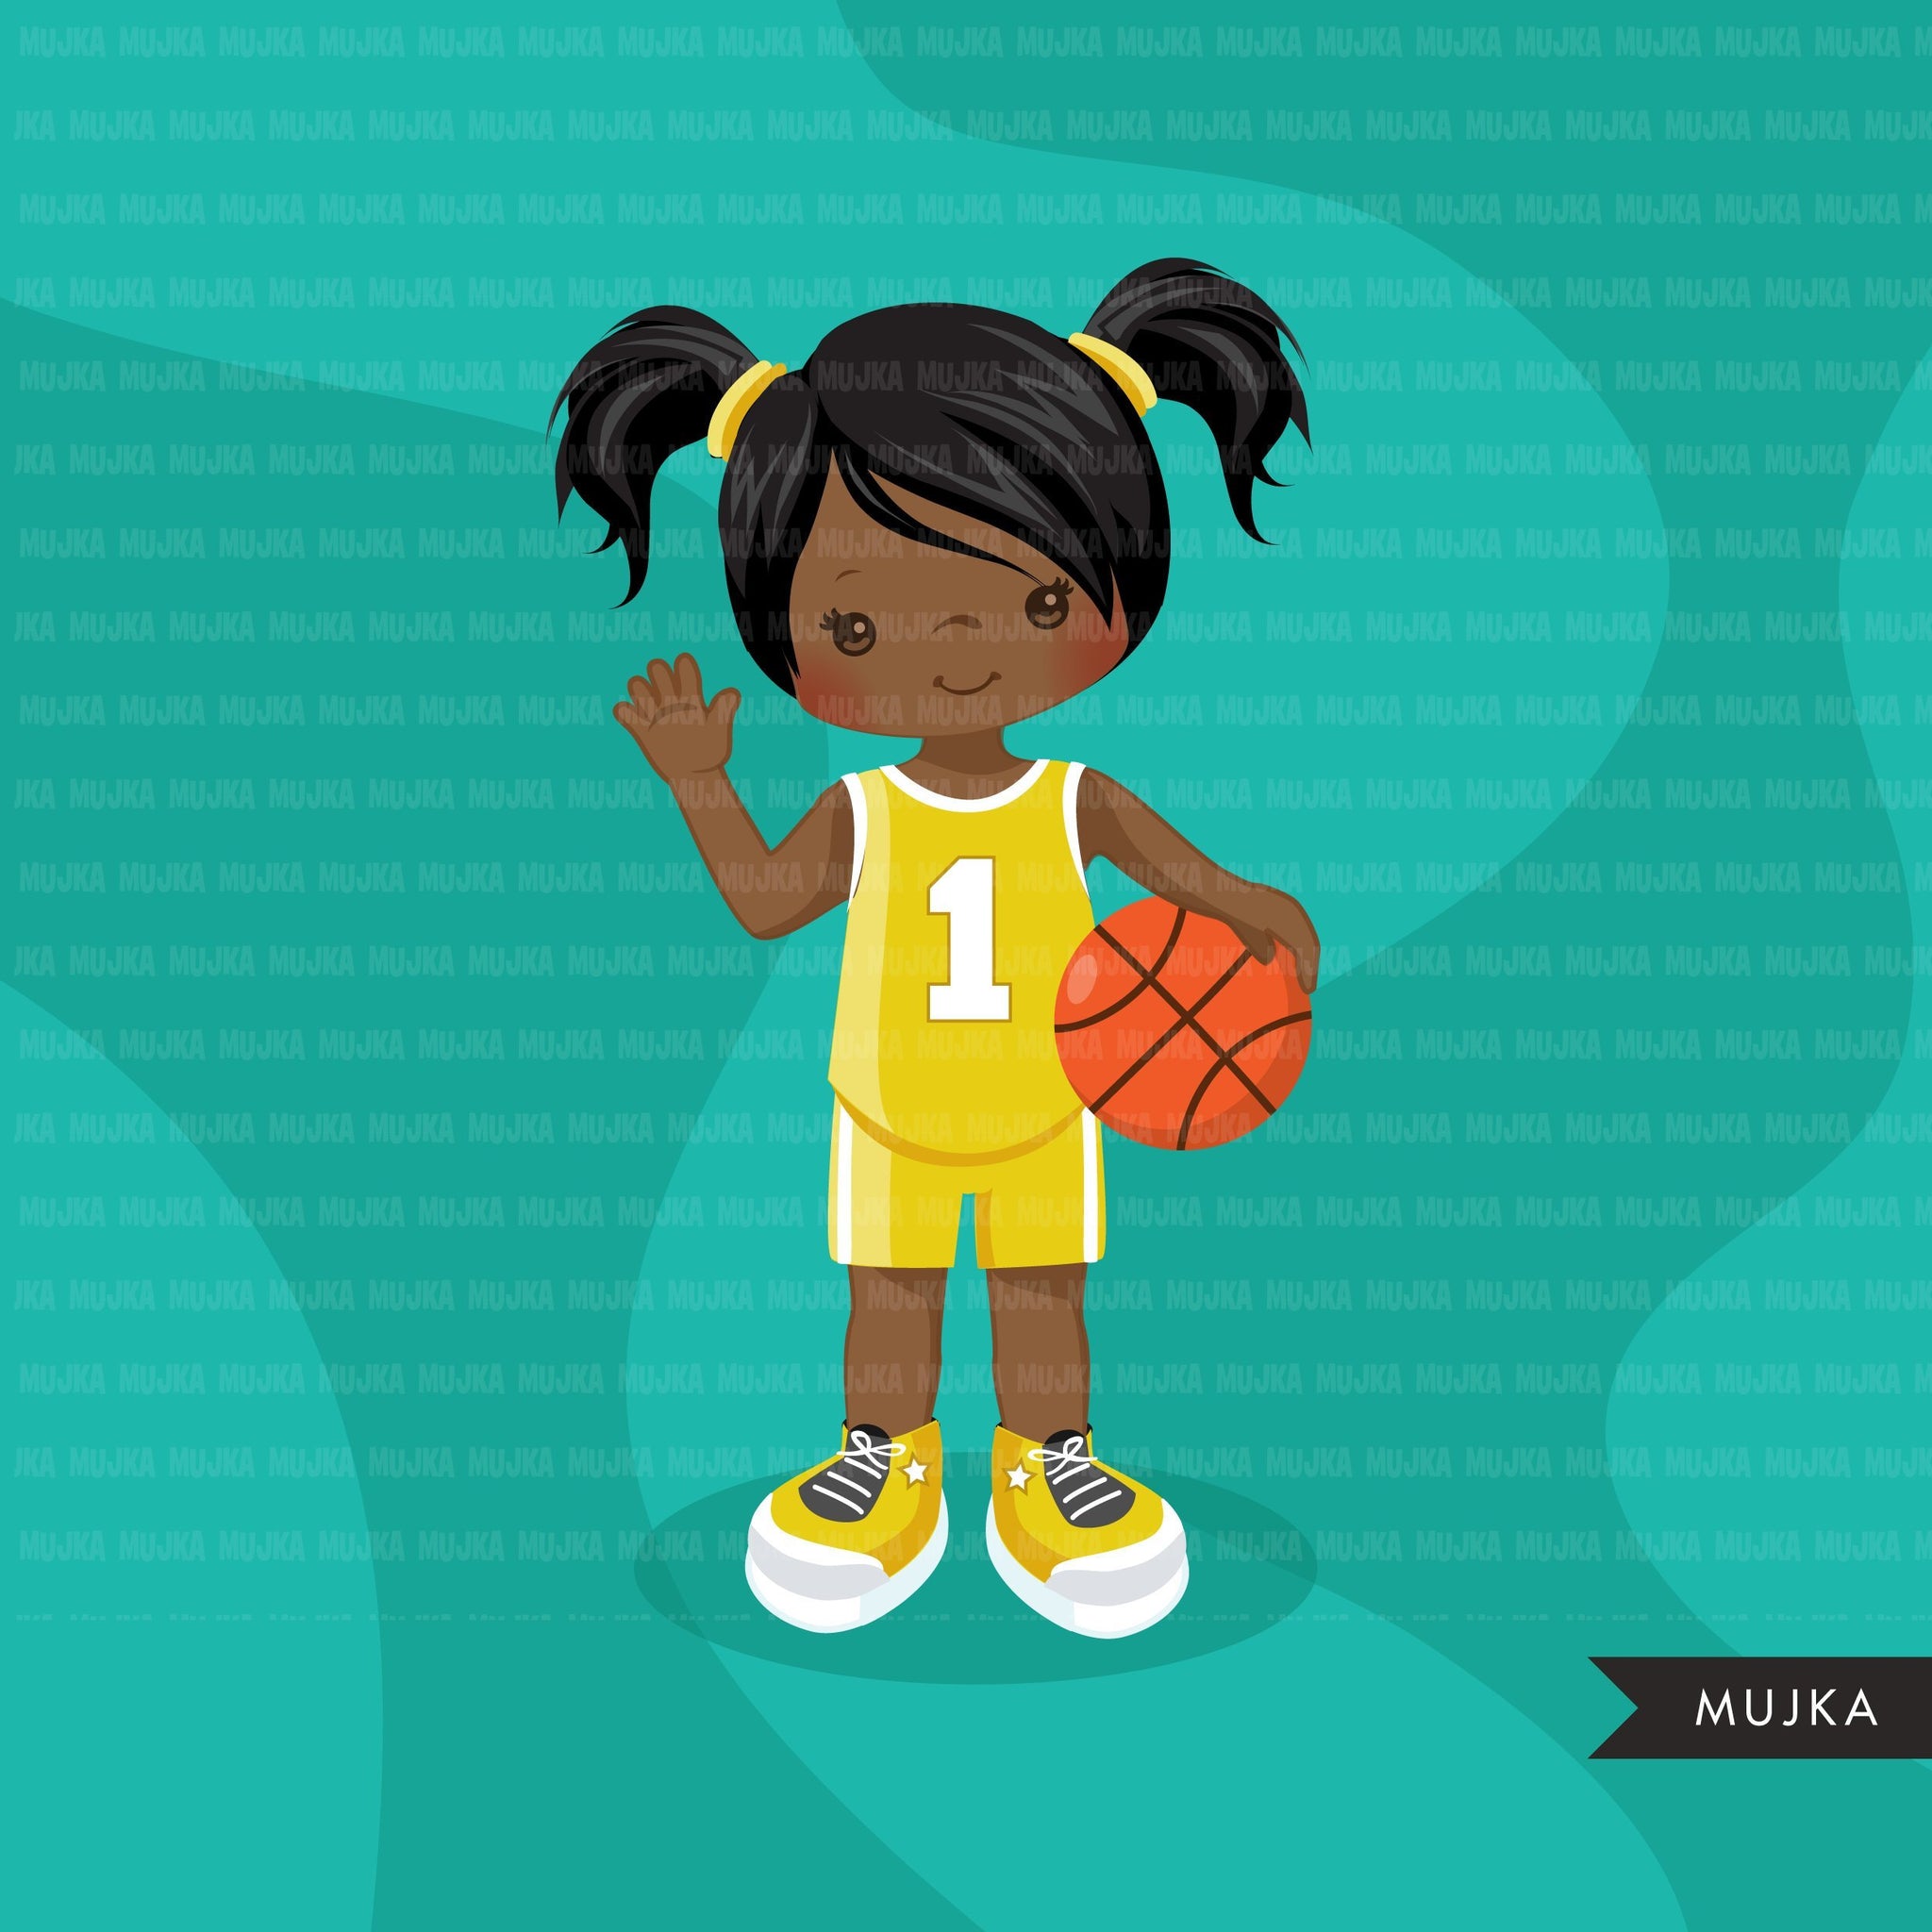 girl playing basketball clipart